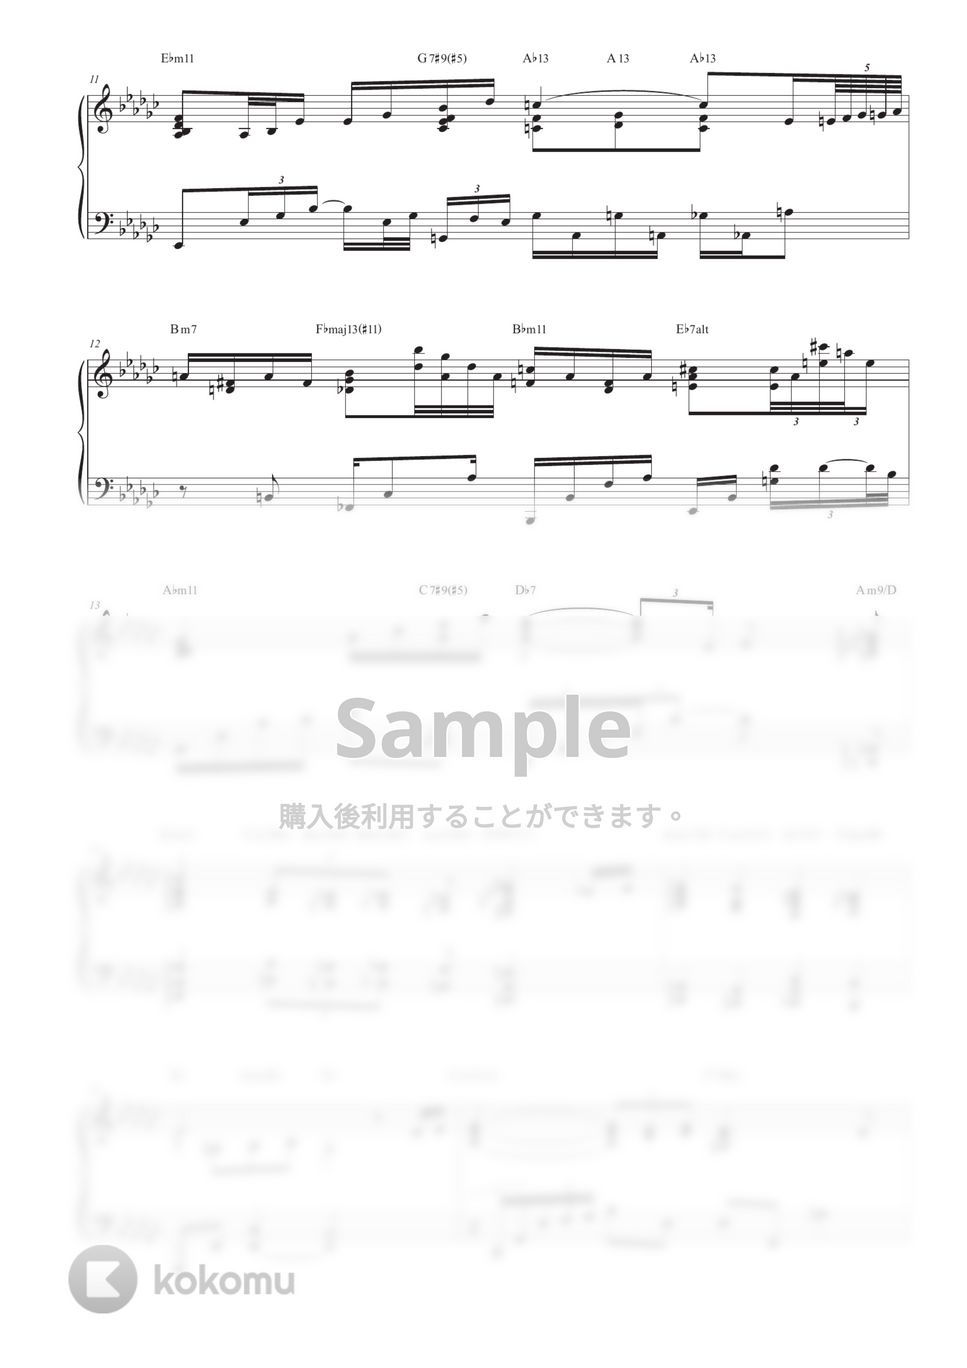 Thelonious Monk - Round Midnight (ピアノソロ / 上級ジャズアレンジ) by Jacob Koller